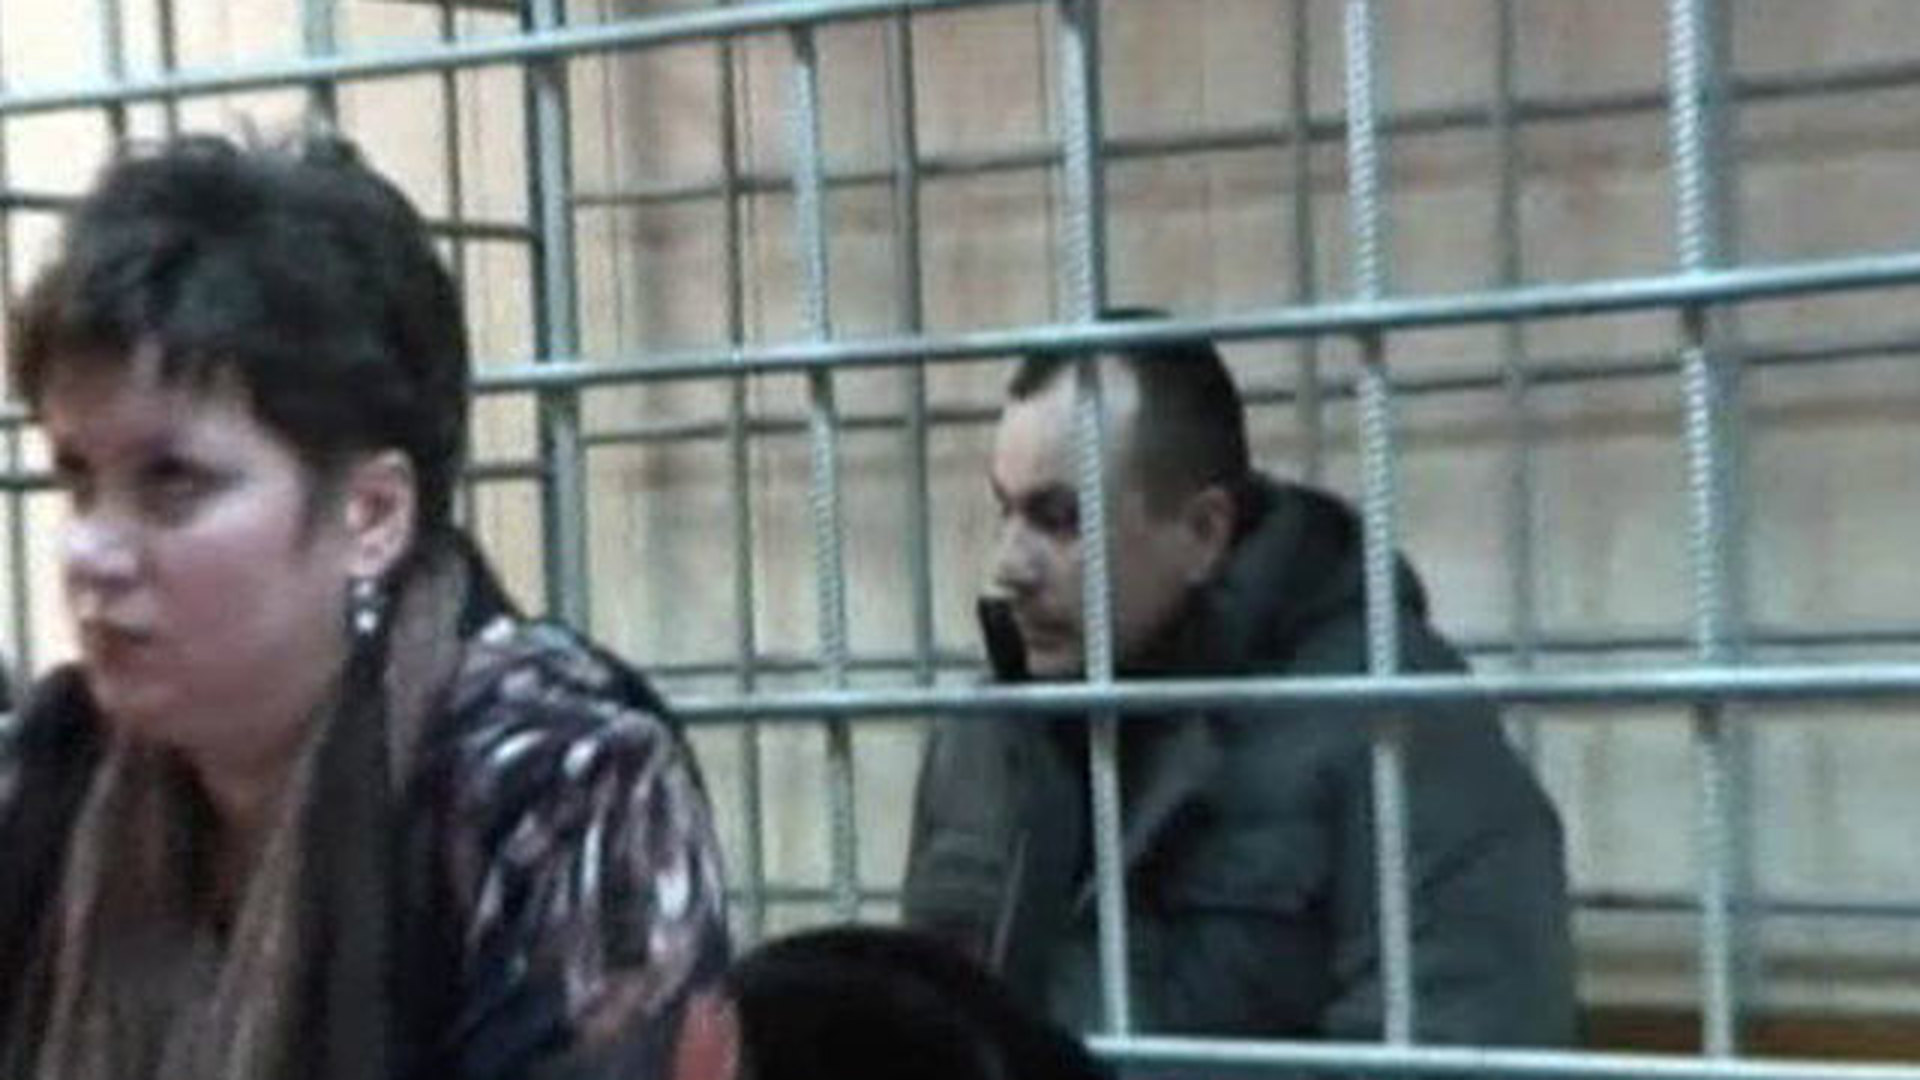 Закончился ли суд над бишембаевым